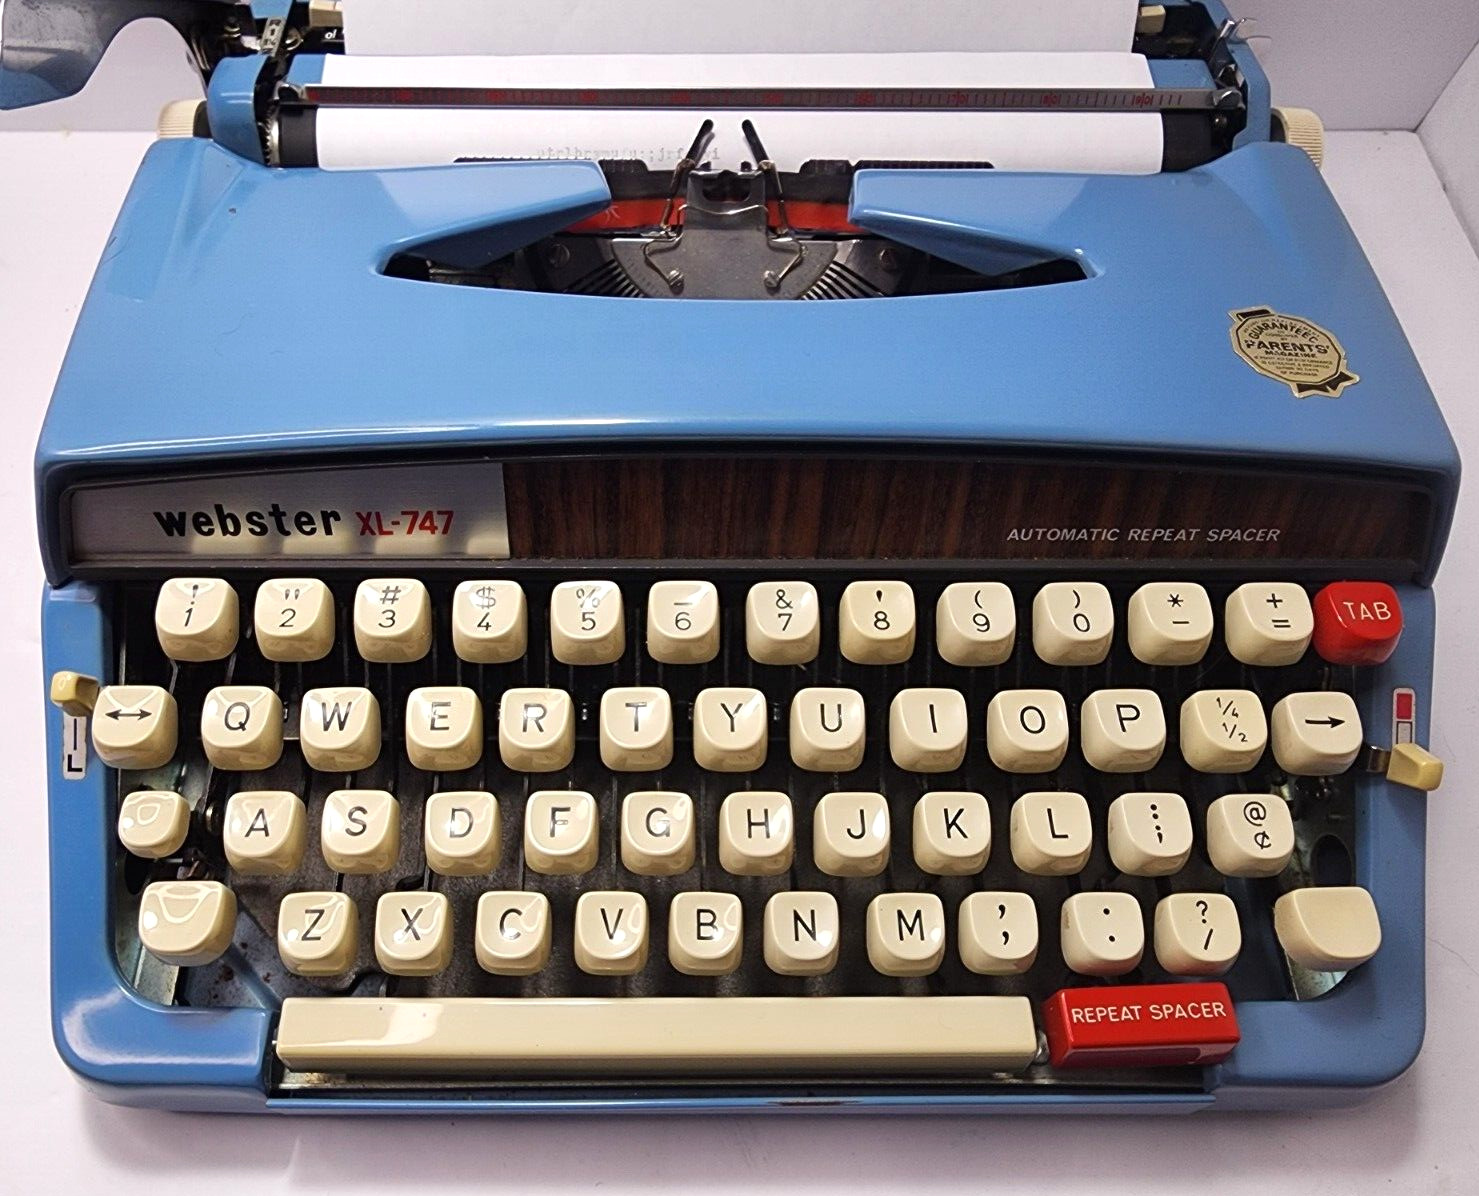 Brother Webster XL-747 Portable Typewriter Vintage Blue With Case *TESTED/WORKS*